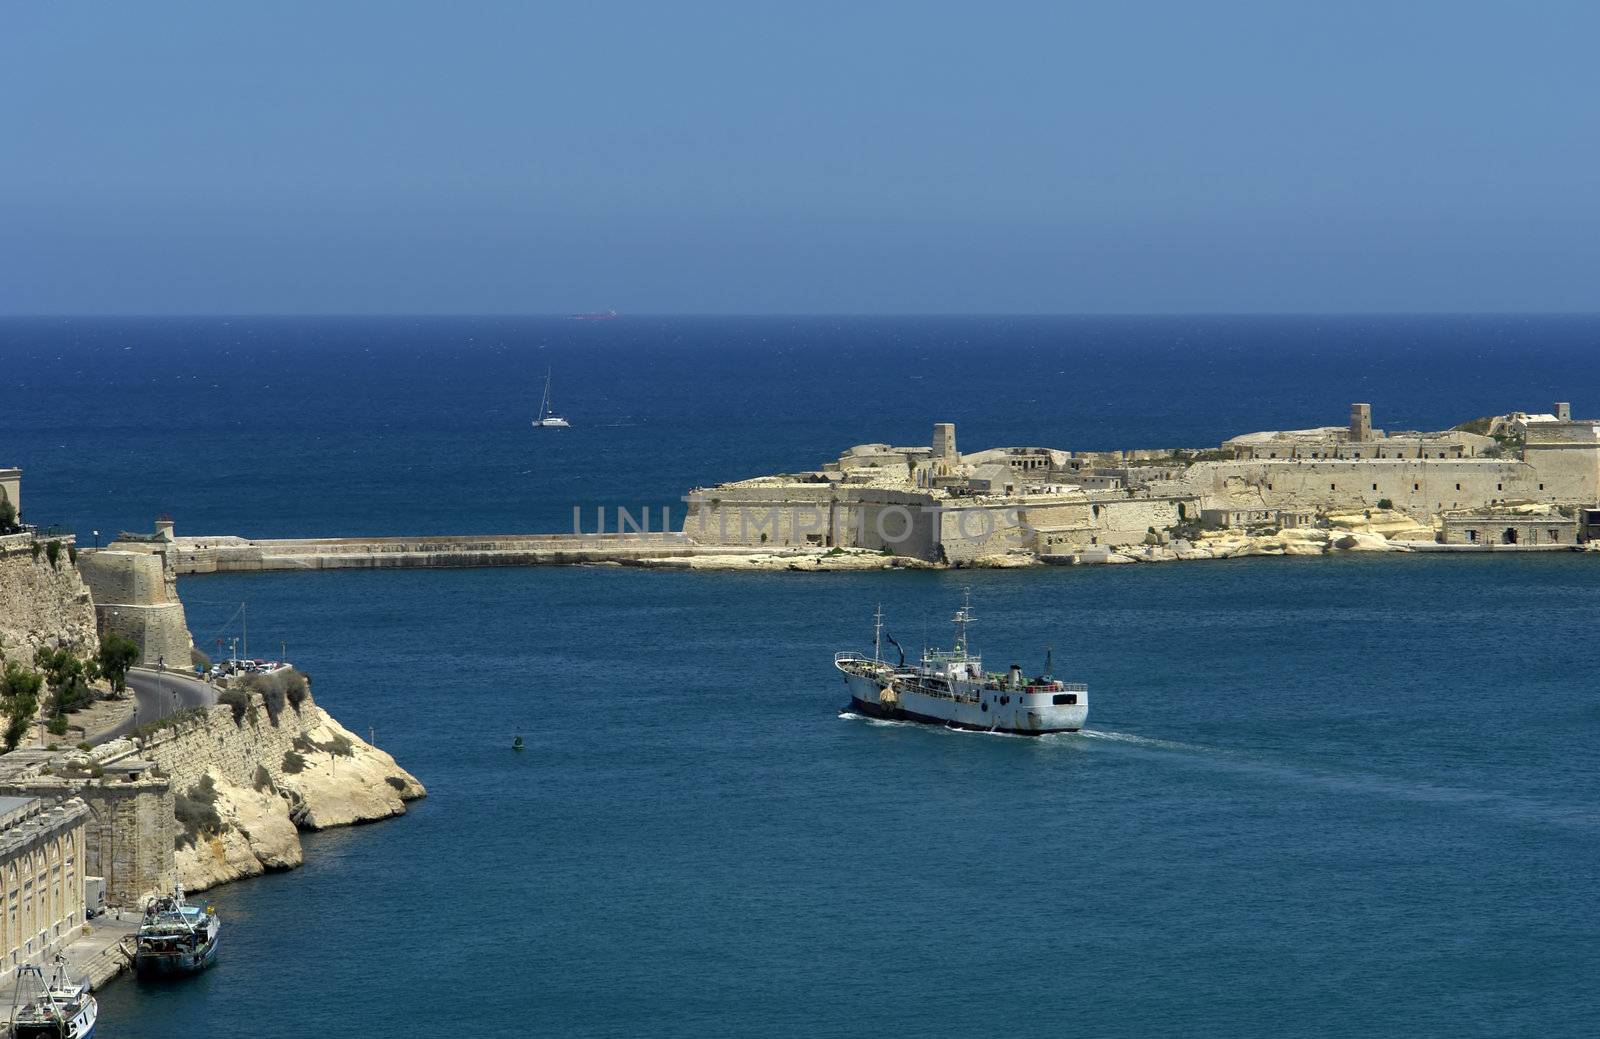 Valetta harbor view, Capital of Malta island